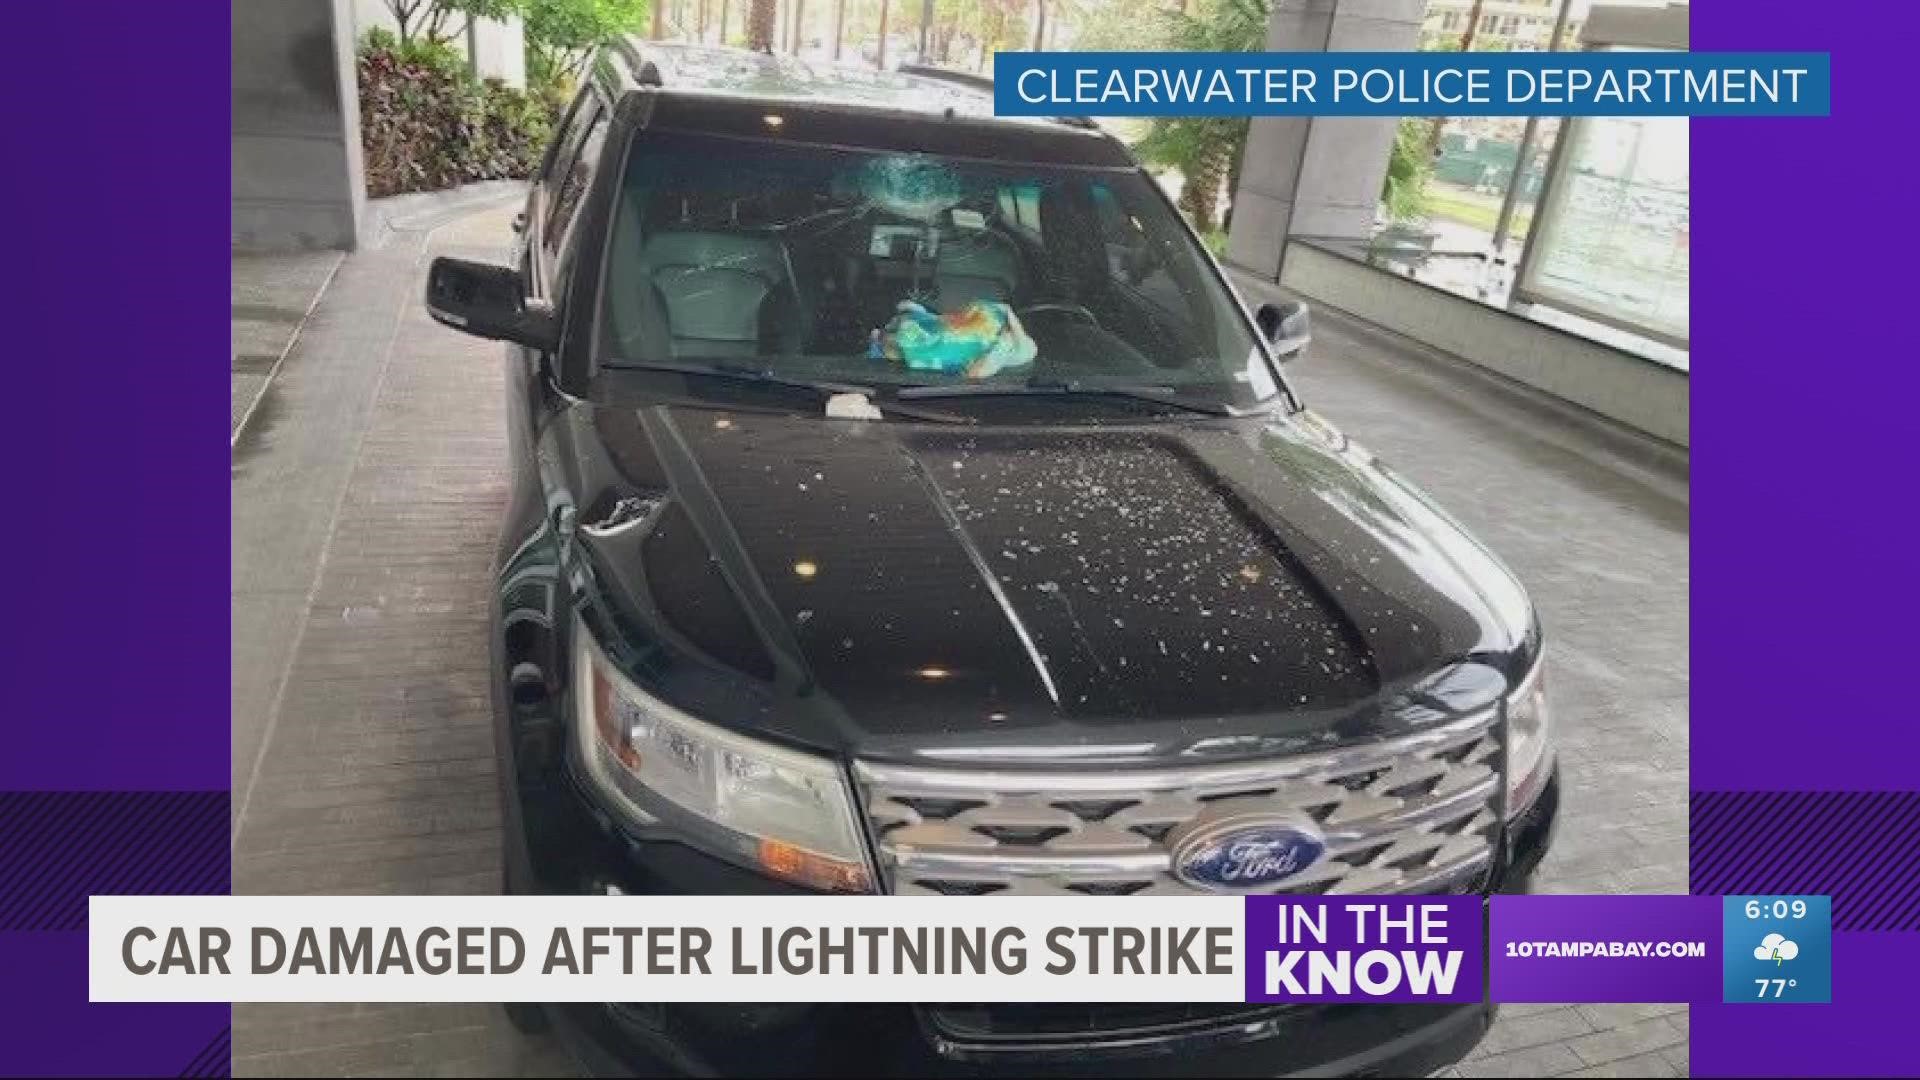 The roof of the Opal Sands Resort was struck by a lightning bolt, sending debris into the parking lot below.